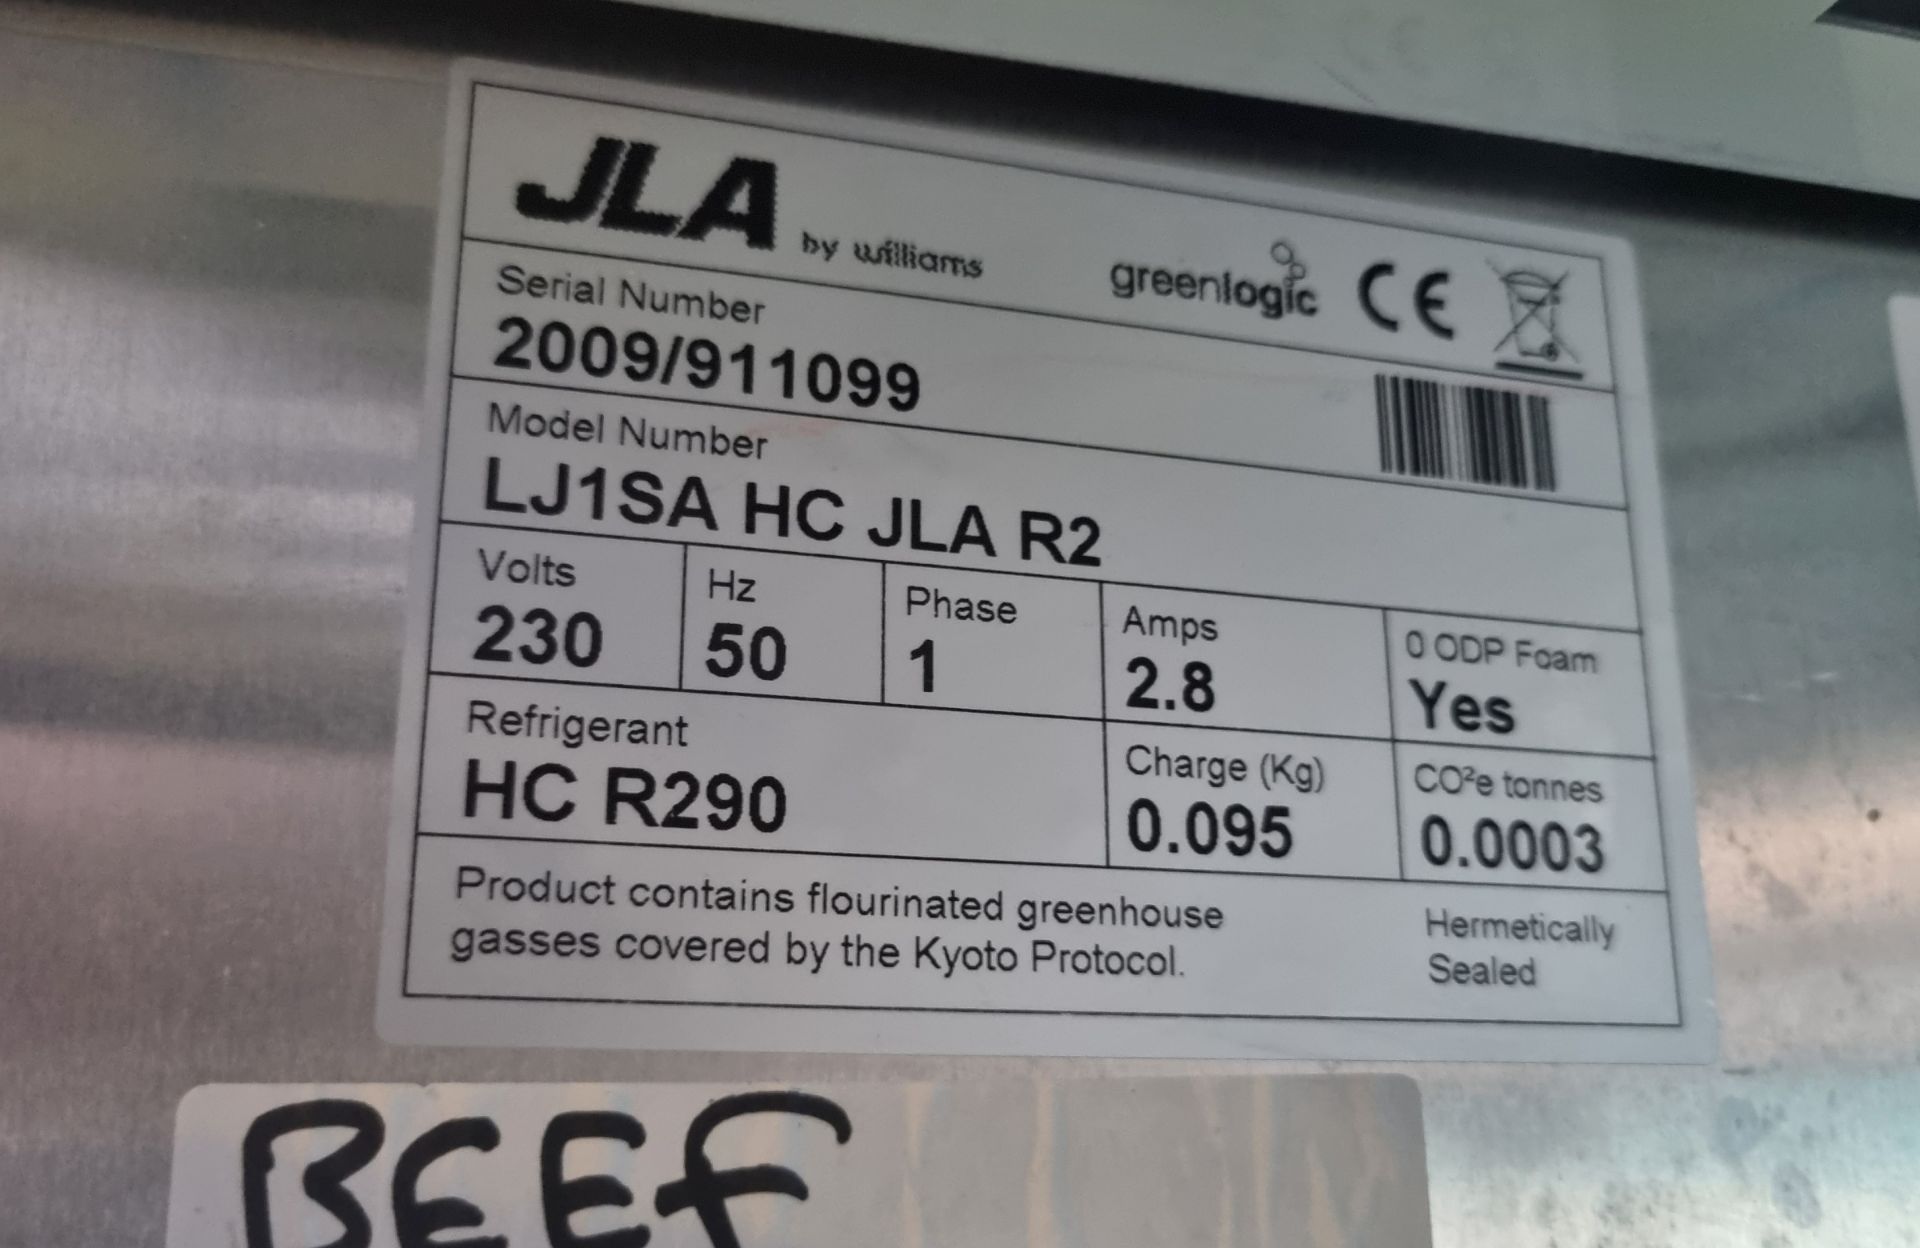 JLA LJ1SA HC - JLA - R2 upright stainless steel single door freezer - 468 ltr - W 730 x D 830 - Image 5 of 5